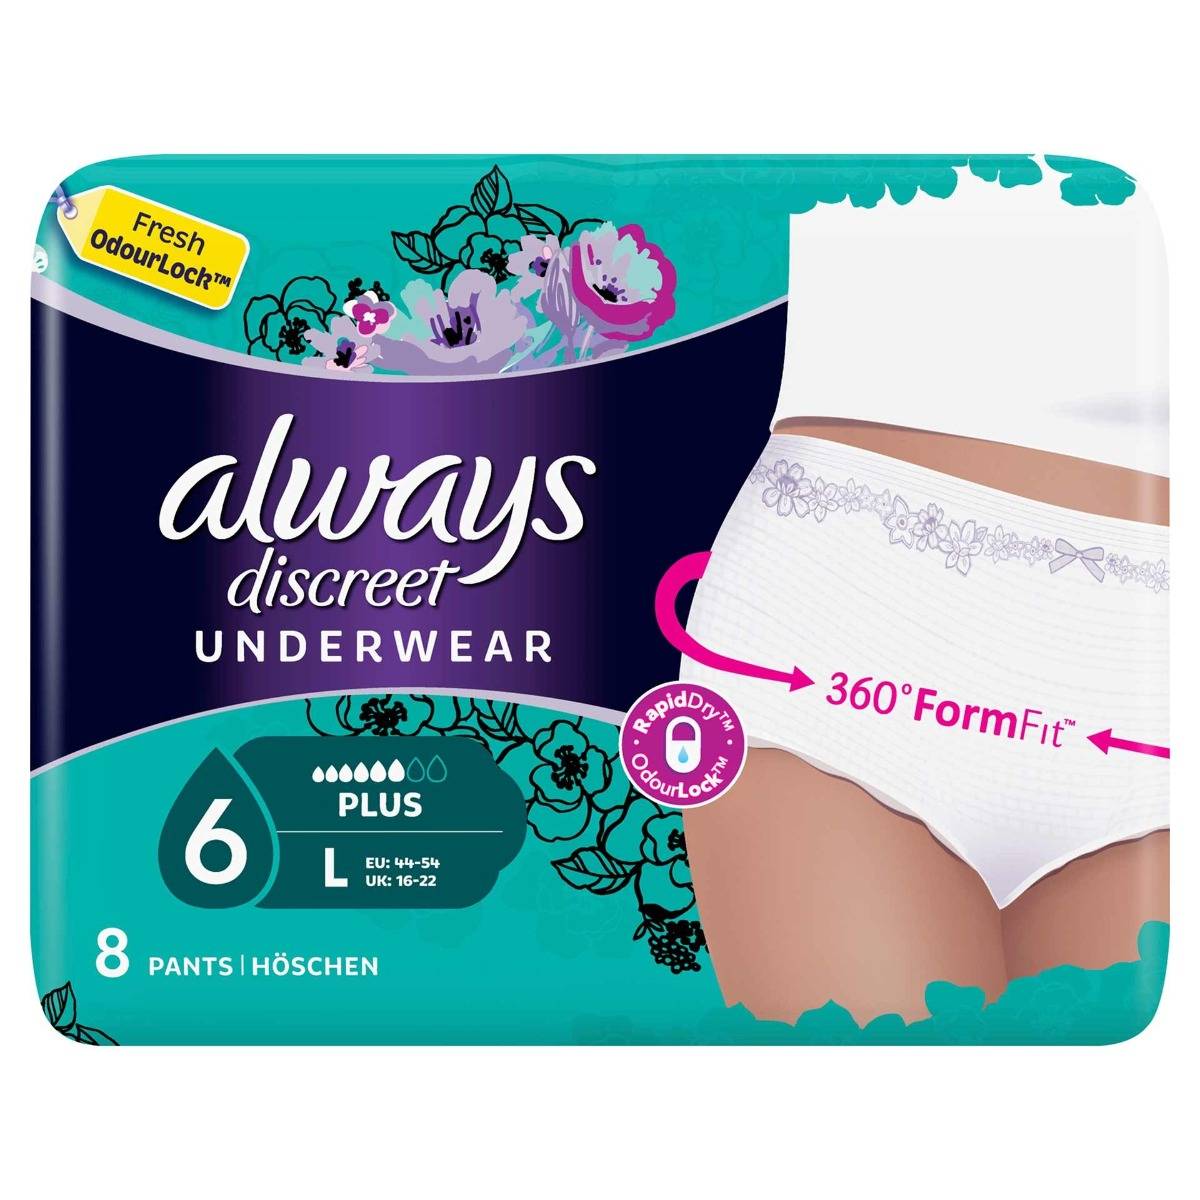 Absorbante si tampoane - Always discreet pants L, 8 bucăți, Procter & Gamble, sinapis.ro